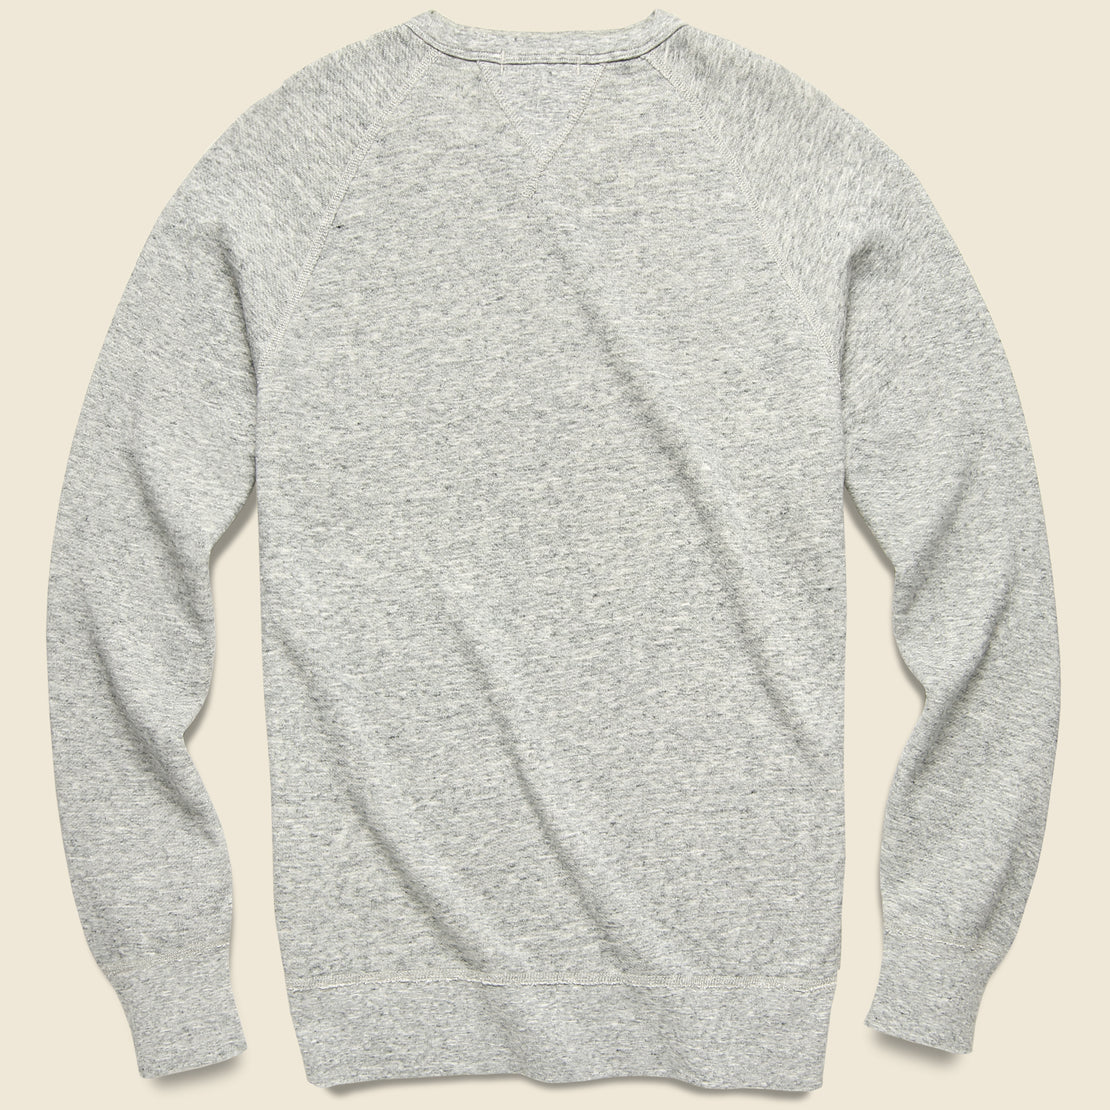 Standard Lightweight Sweatshirt - Heather Grey - Alex Mill - STAG Provisions - Tops - Fleece / Sweatshirt